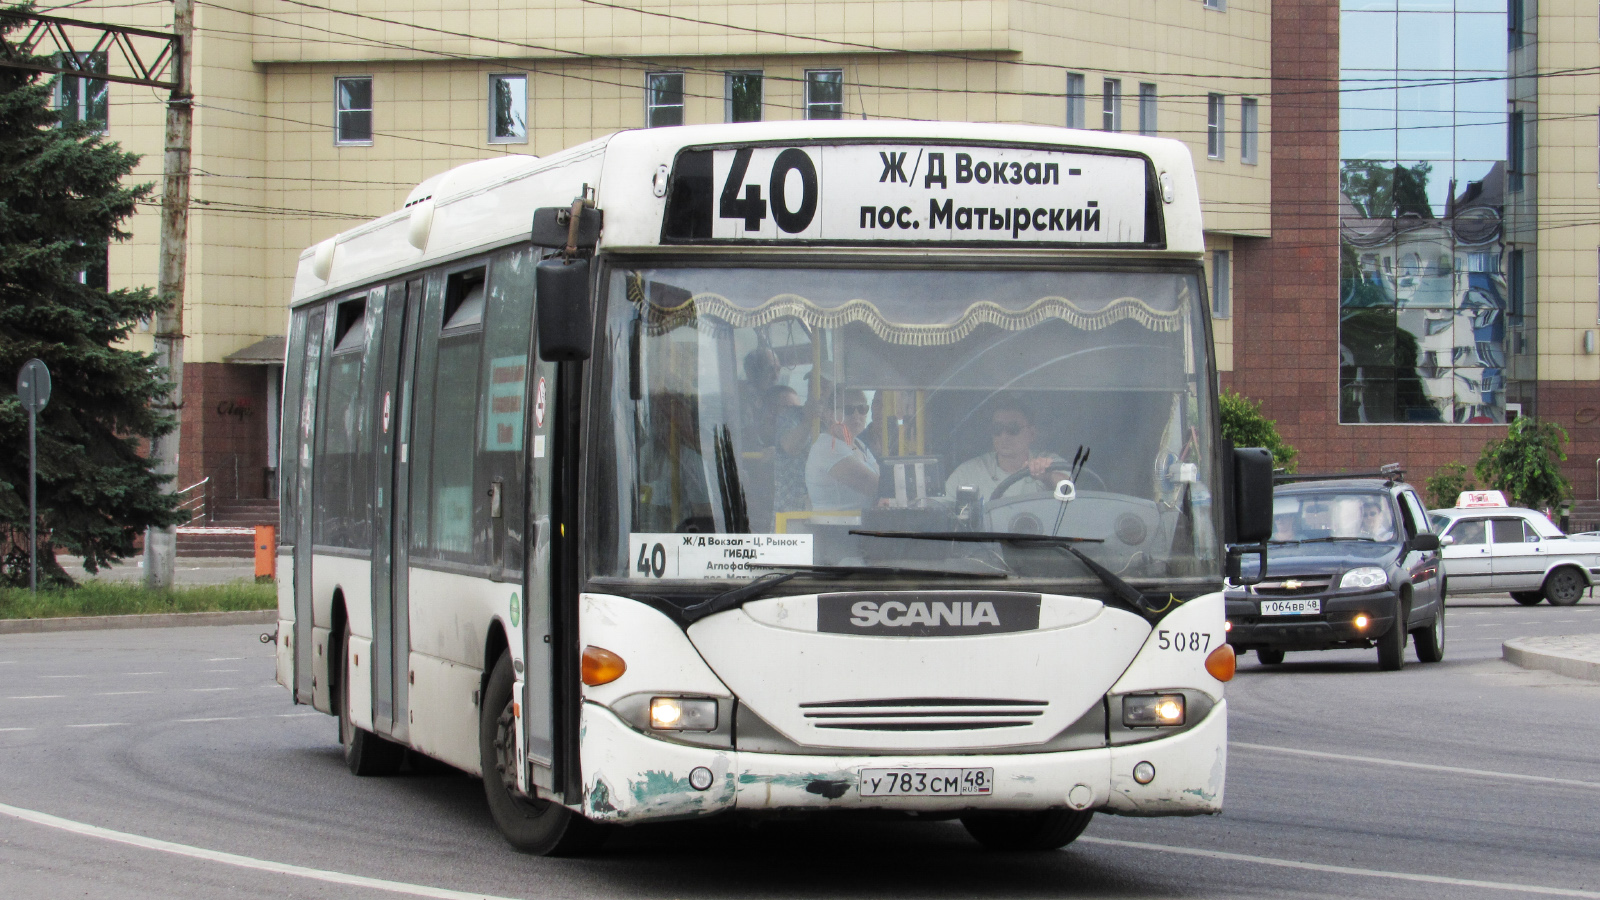 Lipetsk region, Scania OmniLink I (Scania-St.Petersburg) # У 783 СМ 48